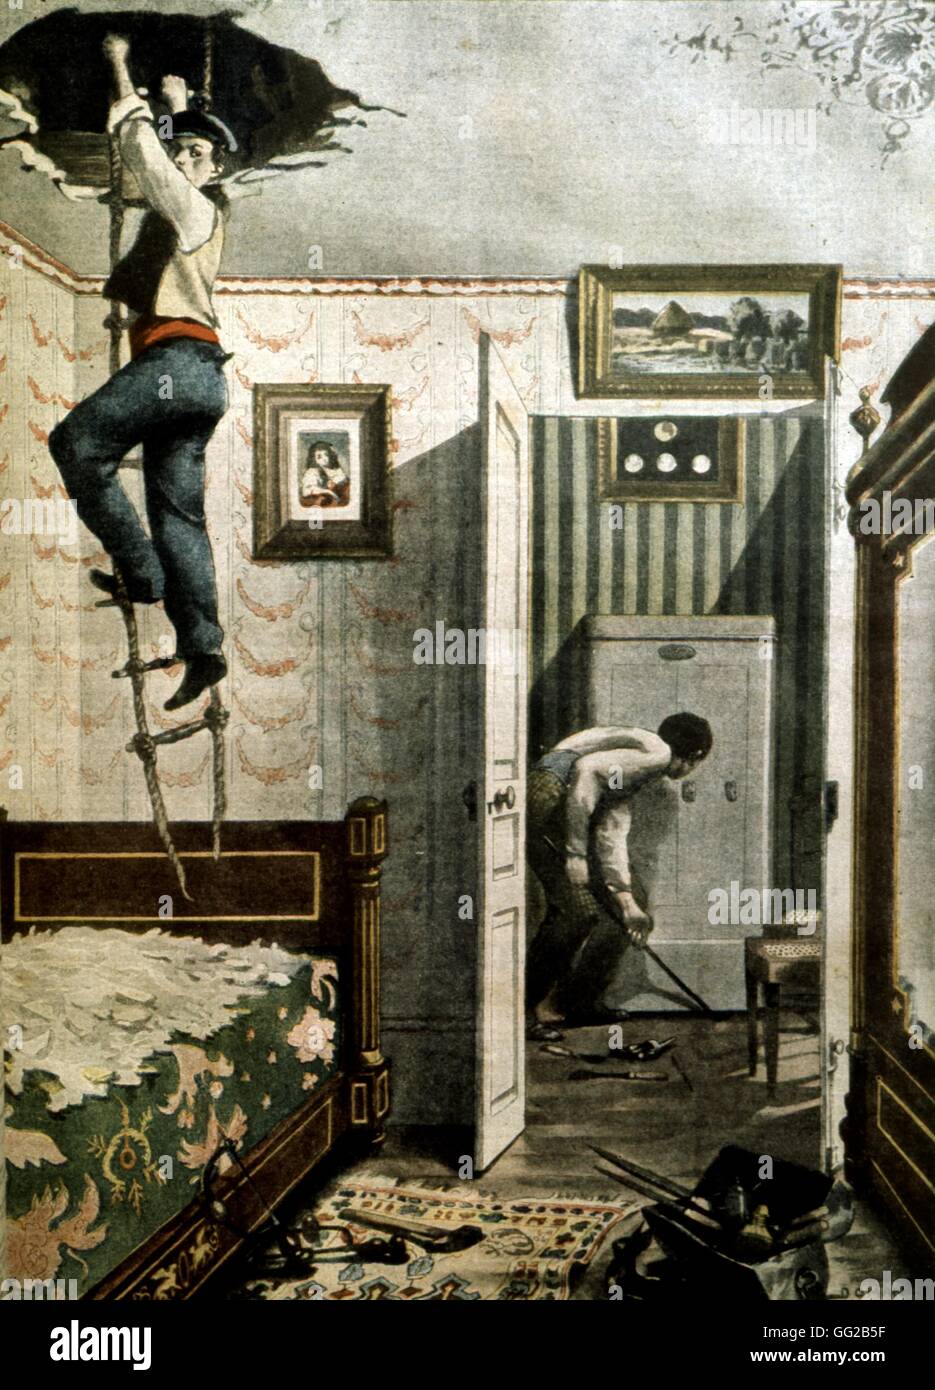 Szene der Einbruch in "Le Petit Journal" Zeitung 1901 Frankreich Edouard Rousseau Sammlung Stockfoto